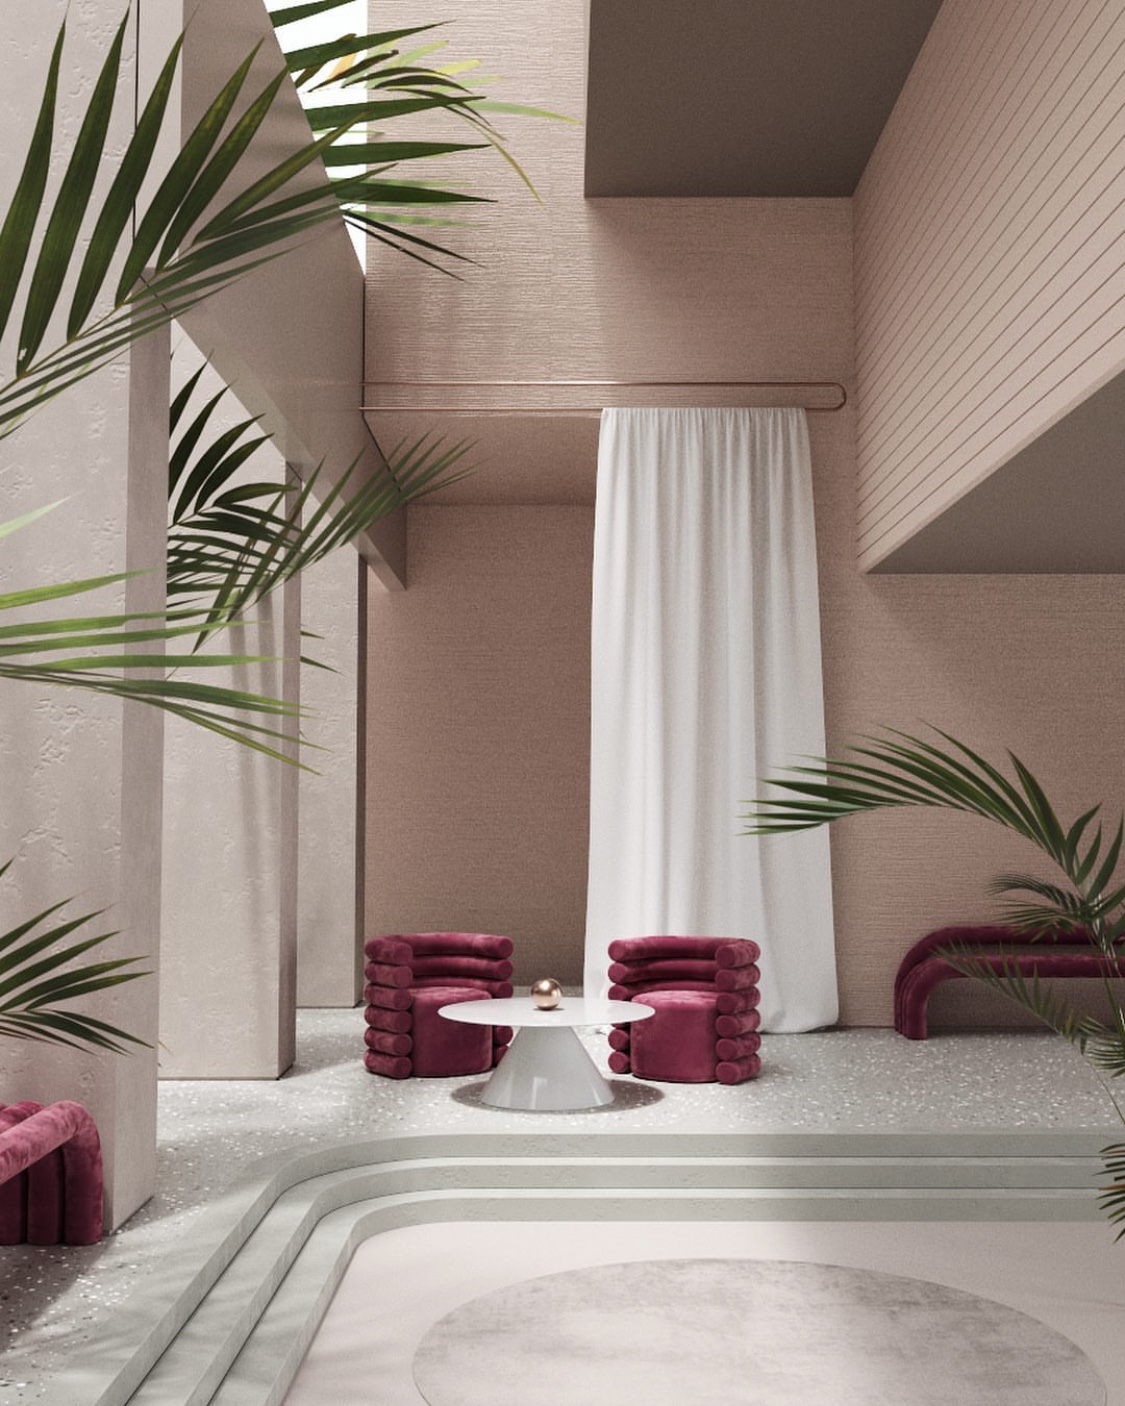 viva magenta home - foyer receiving area in magenta gray red pink color design interior